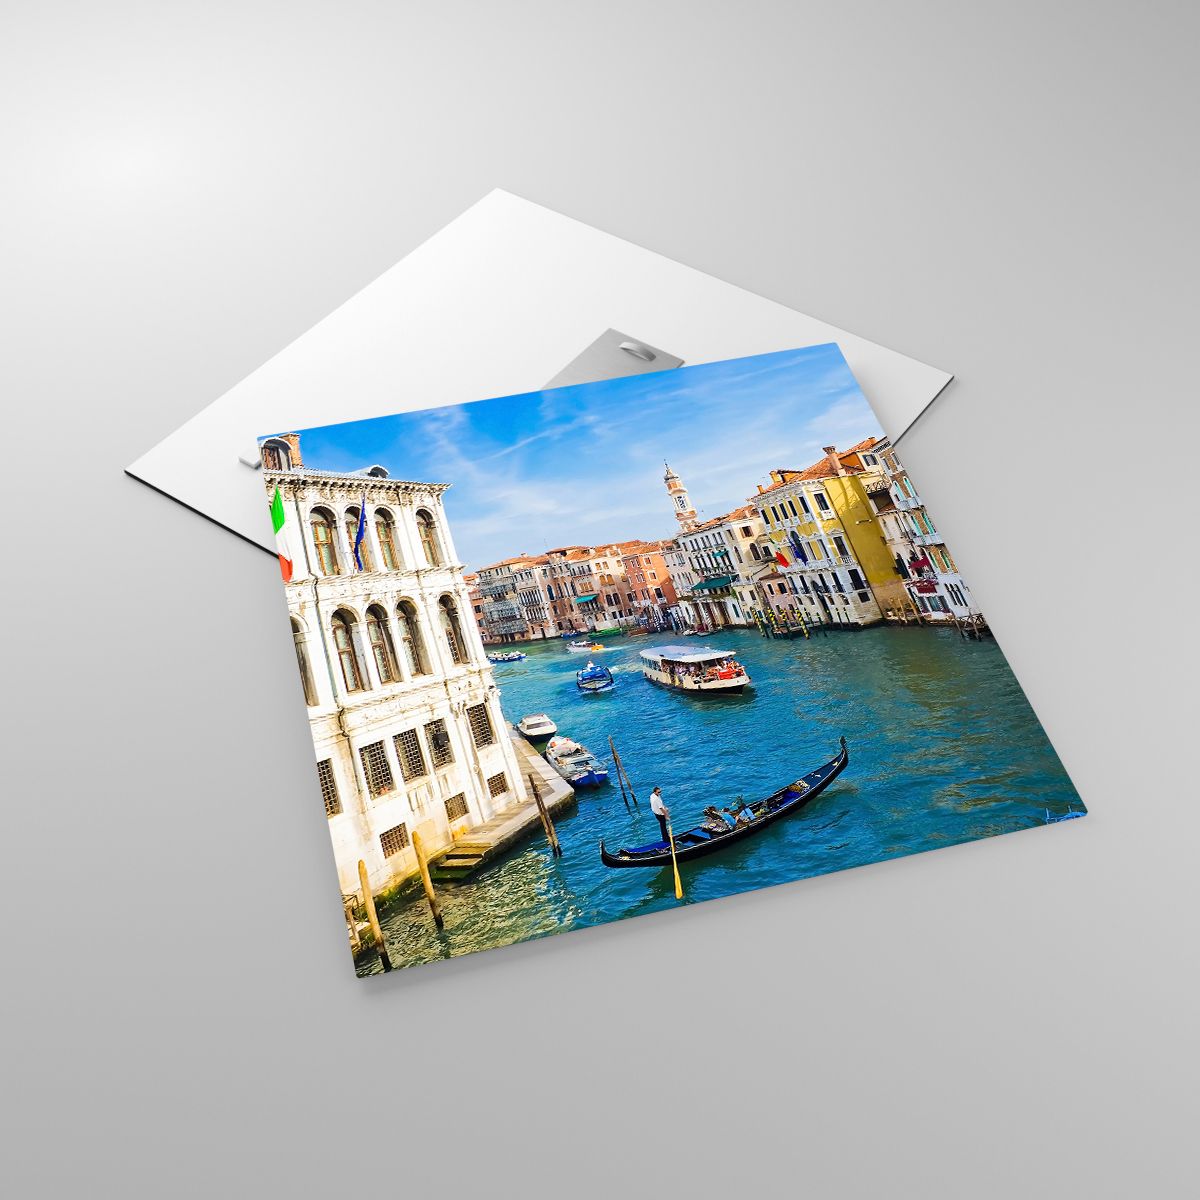 Glasbild Venedig, Glasbild Die Architektur, Glasbild Canal Grande, Glasbild Gondel, Glasbild Reisen